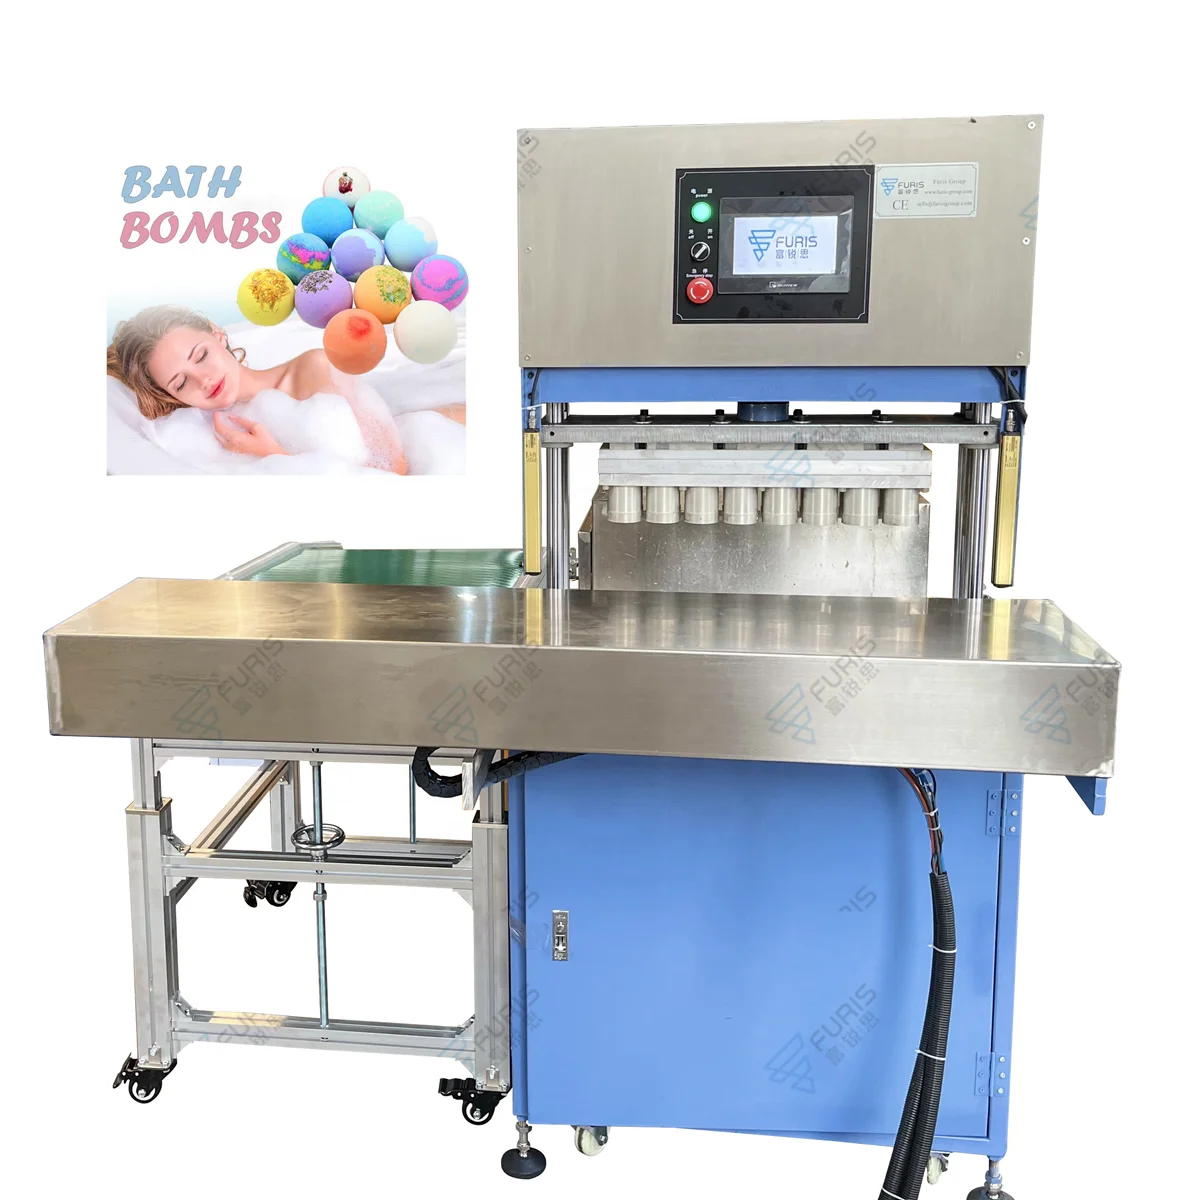 
2021 USA Best sell Bath Soap Maker Machine Press Factory Direct Supply 